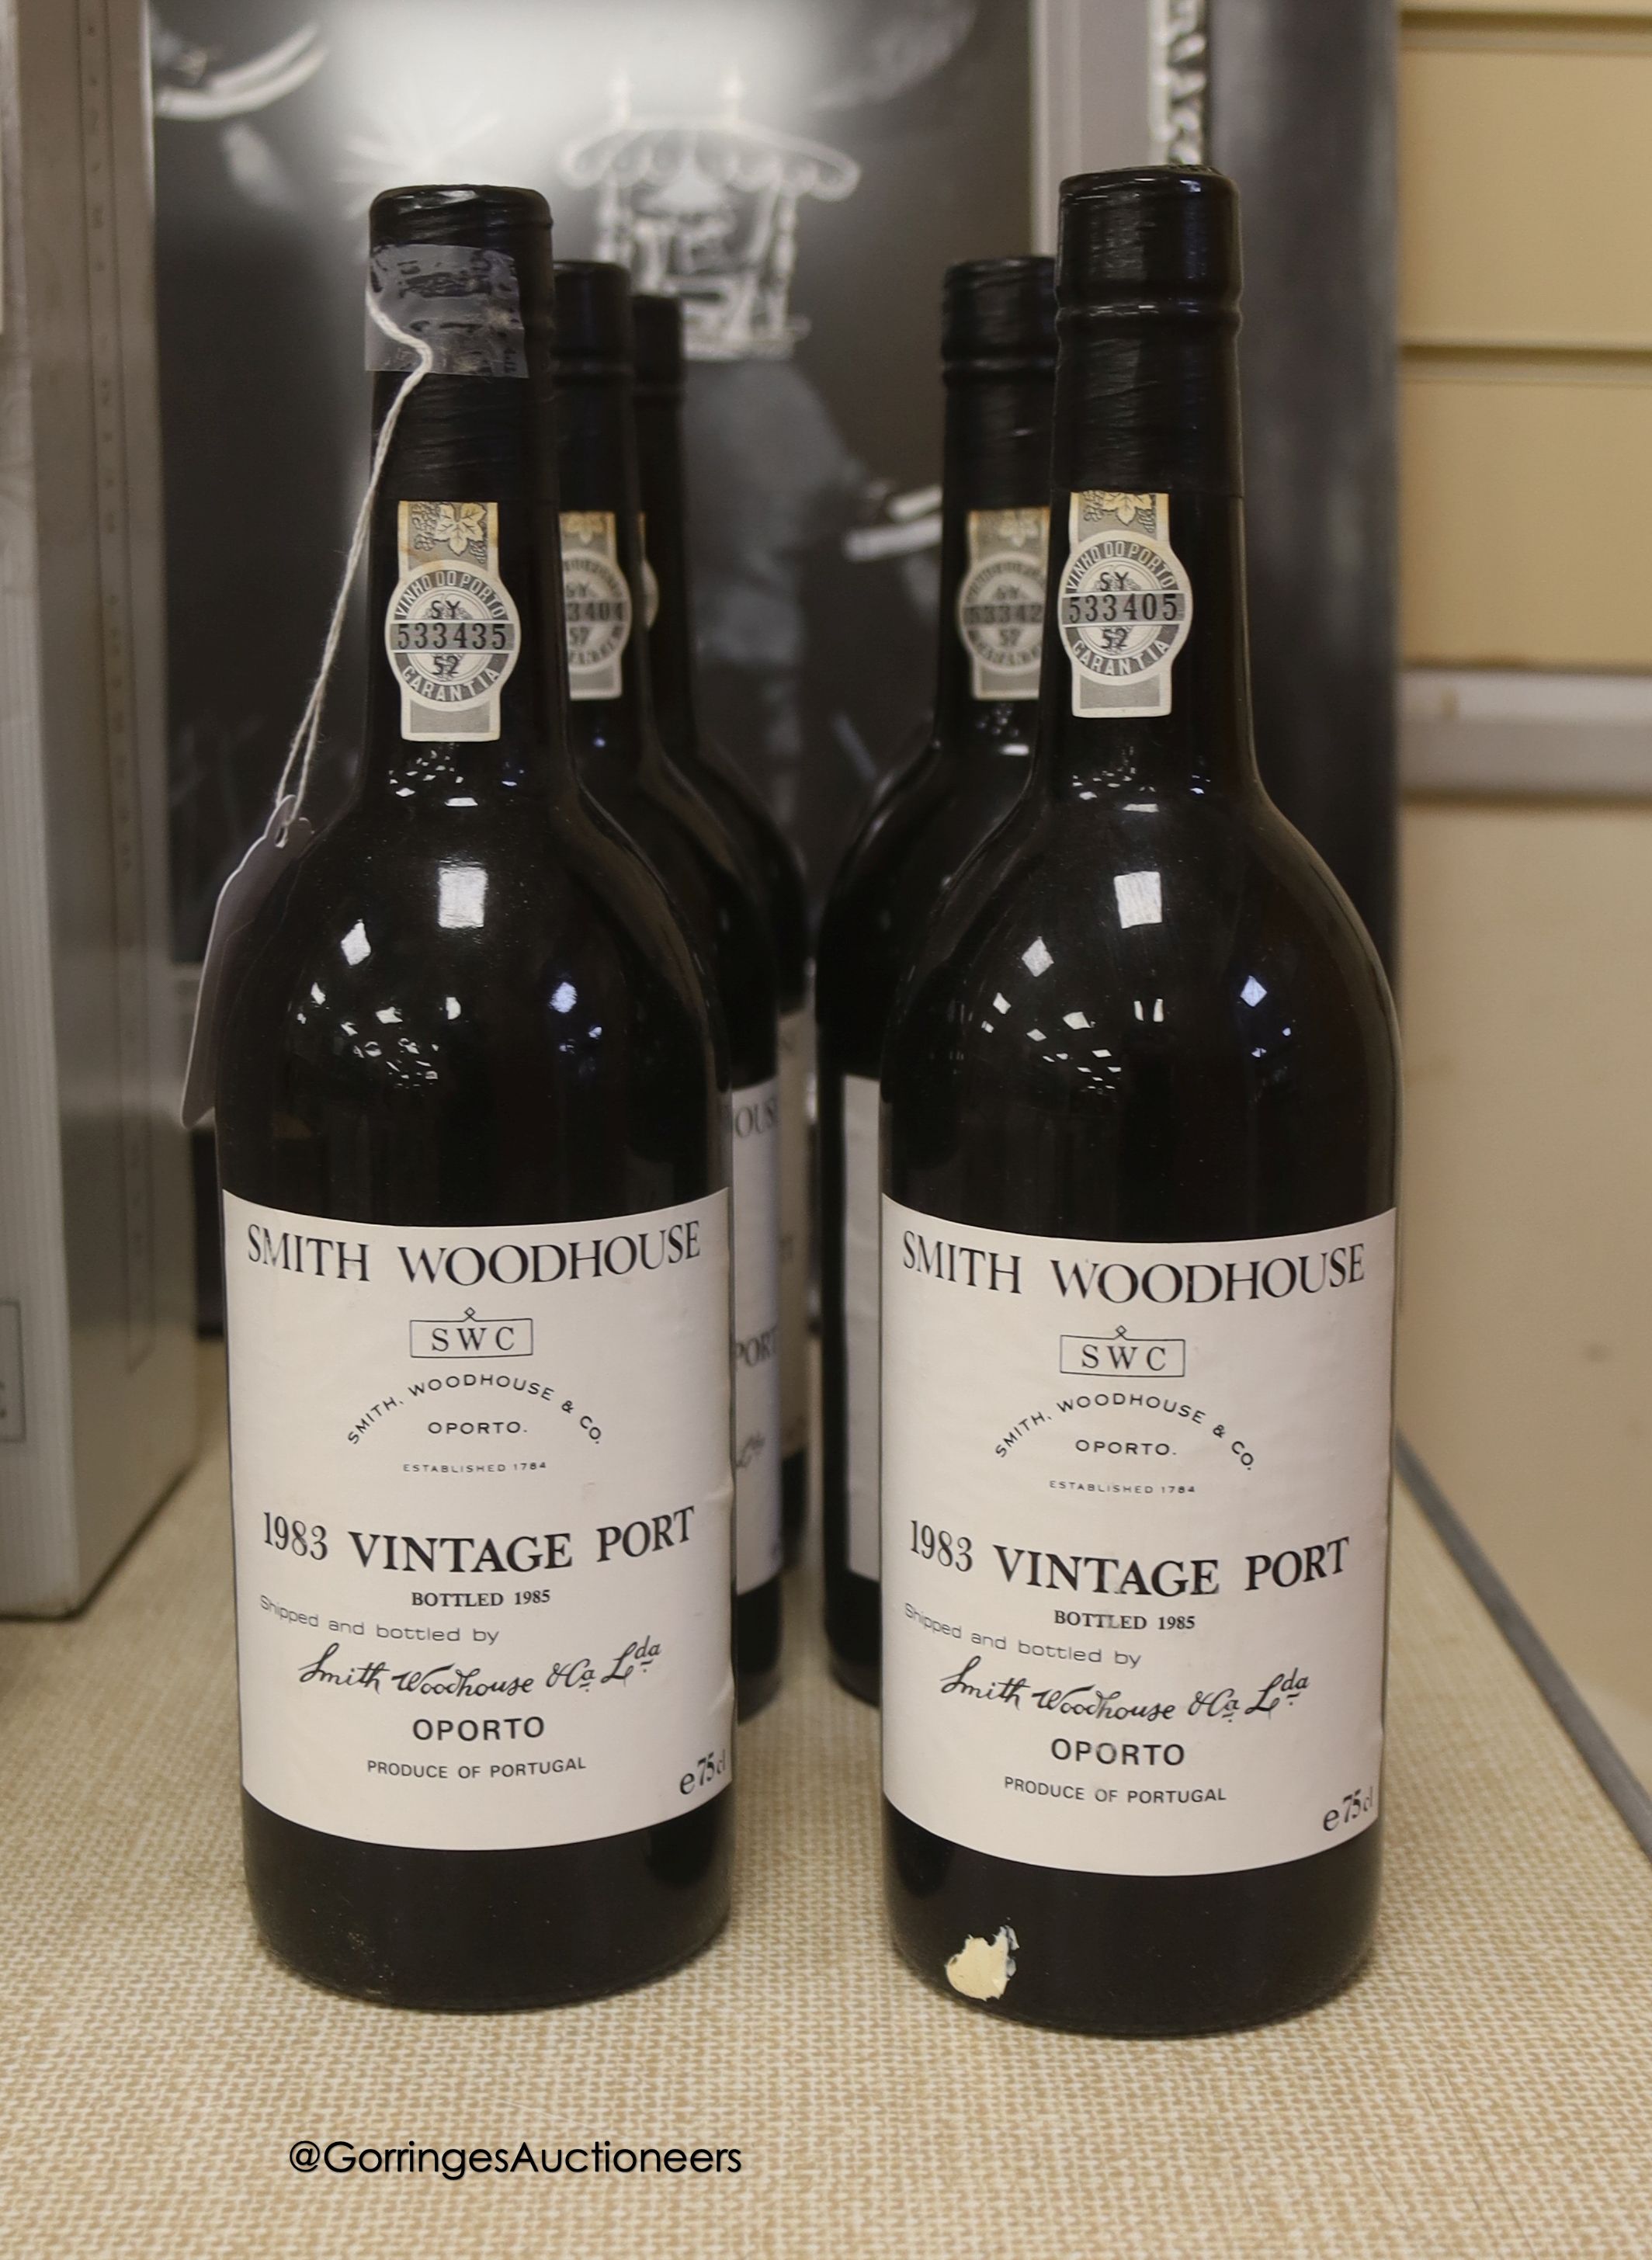 Six bottles of Smith & Woodhouse 1983 Port